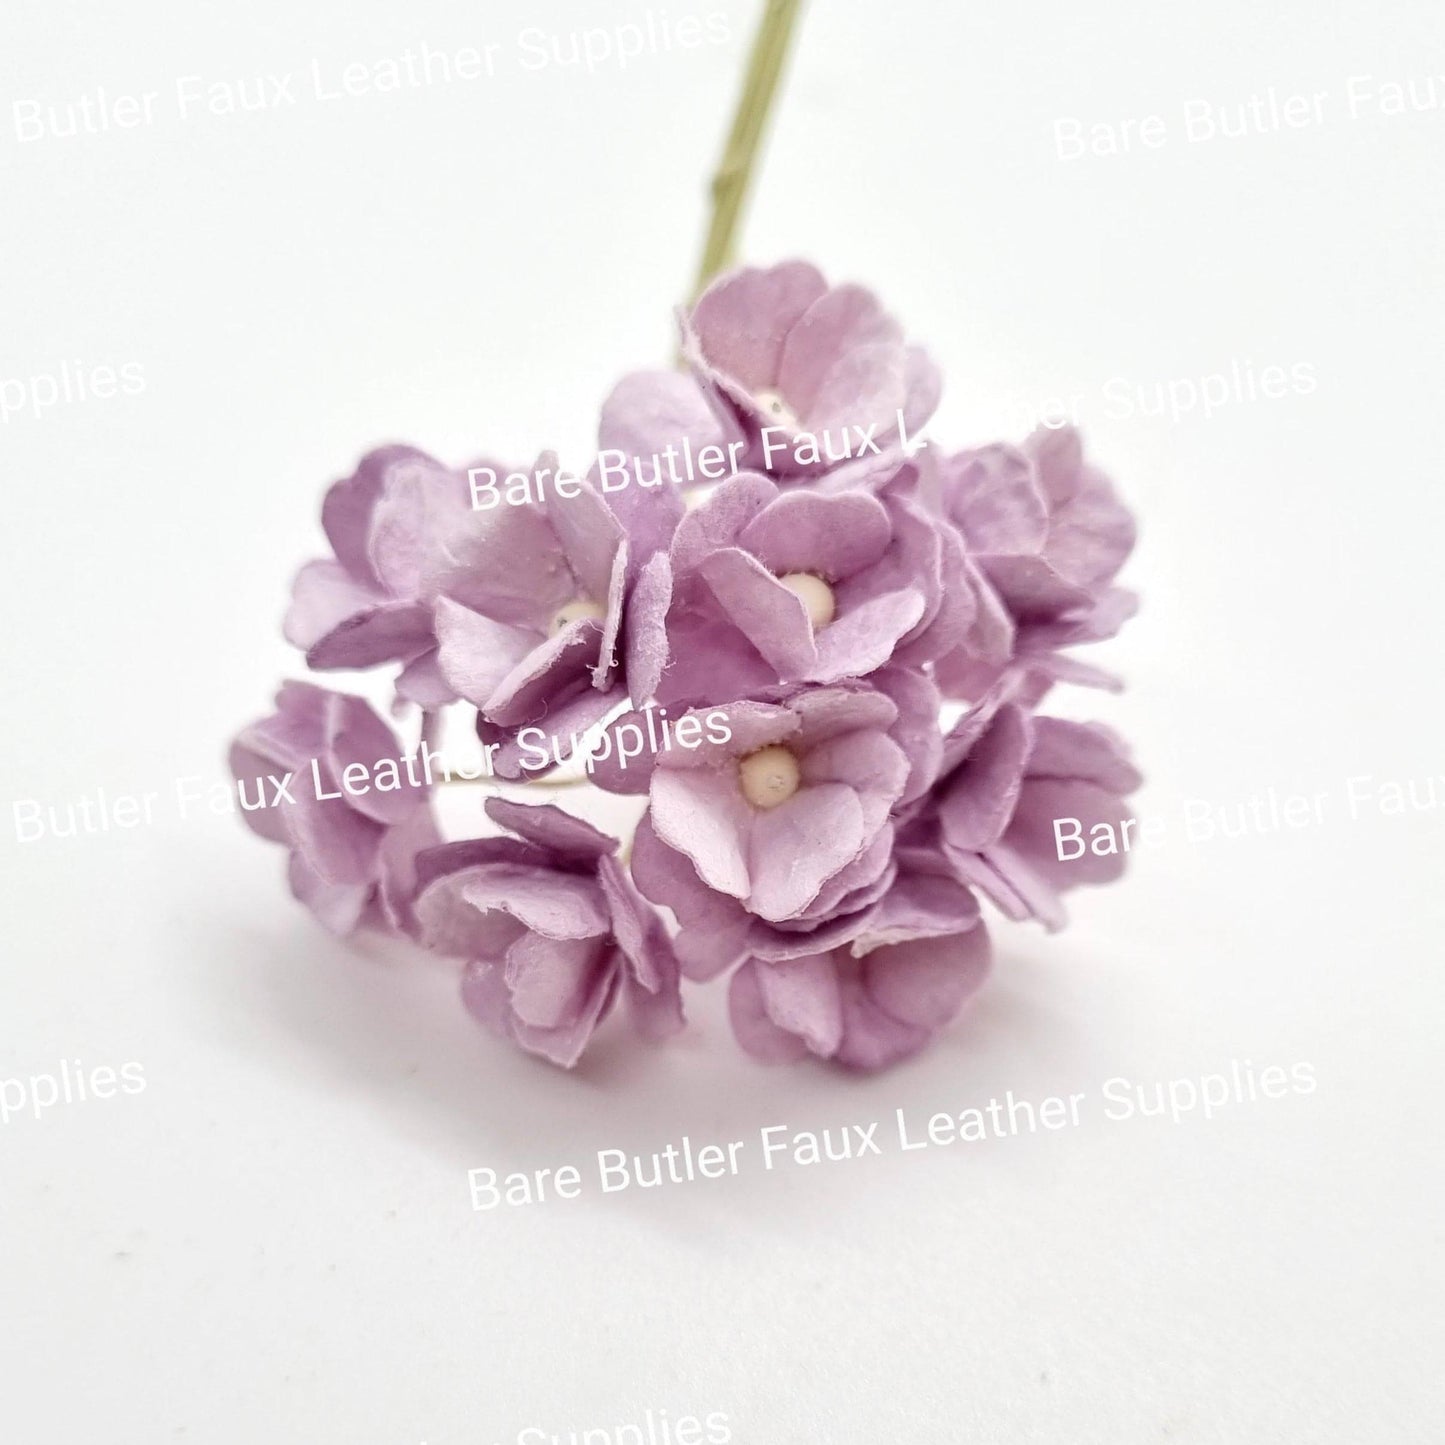 Hydrangea Purple 10 Pack - Embelishment, Flower, hydrangea, Mulburry - Bare Butler Faux Leather Supplies 